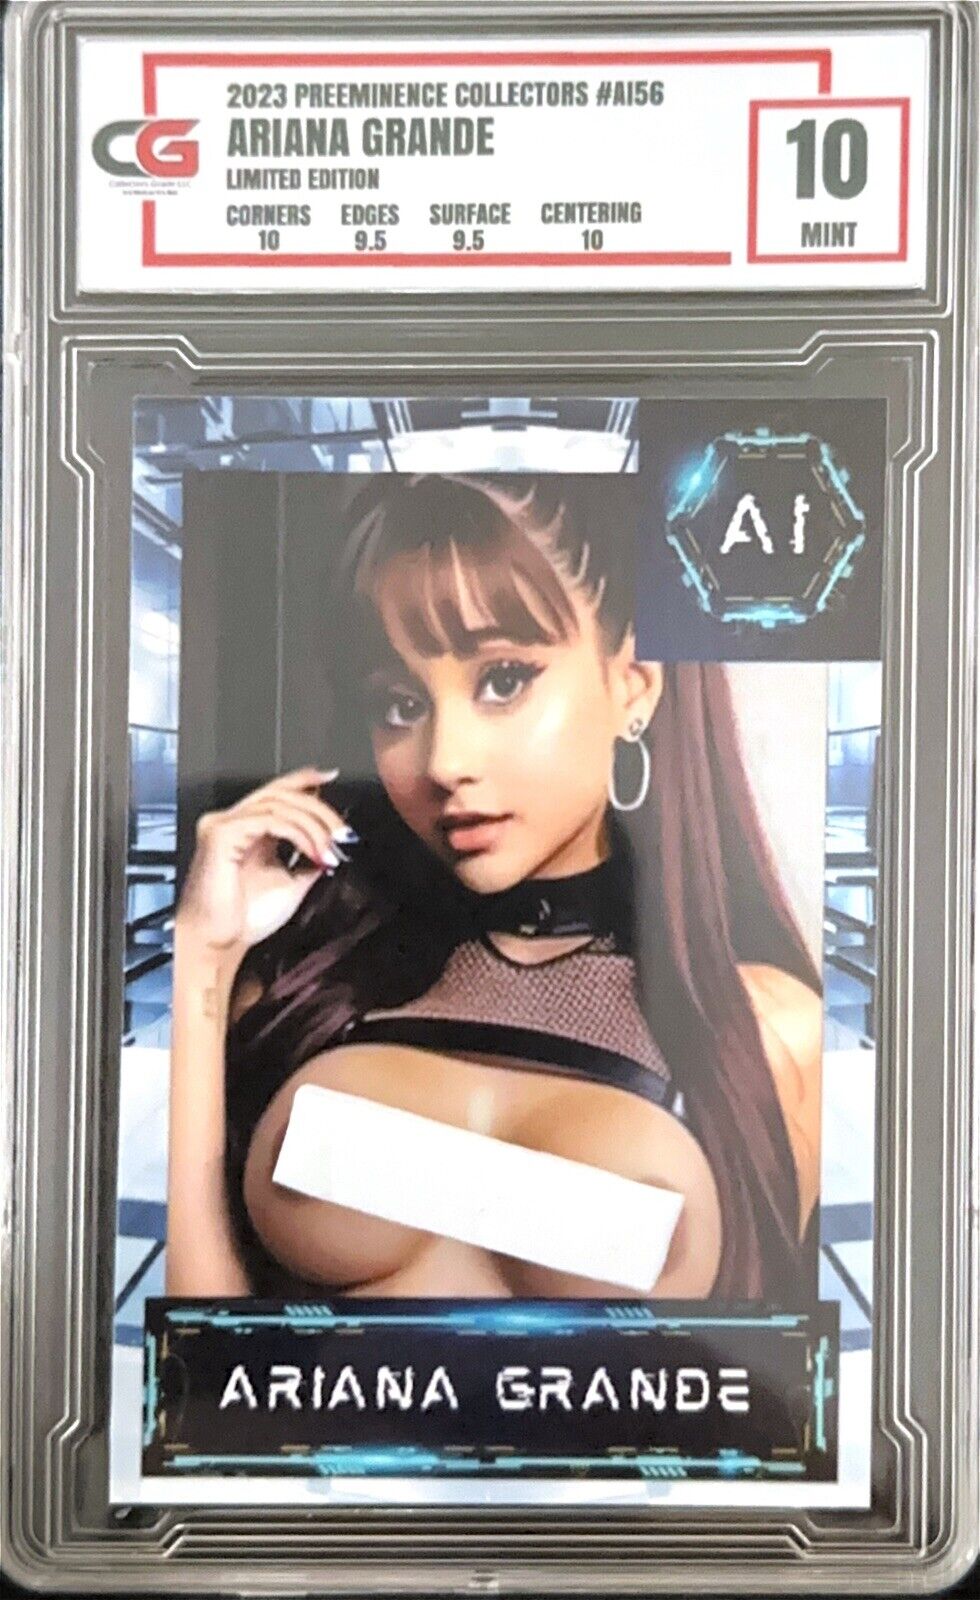 Ariana Grande Card Cg Graded Mint 10